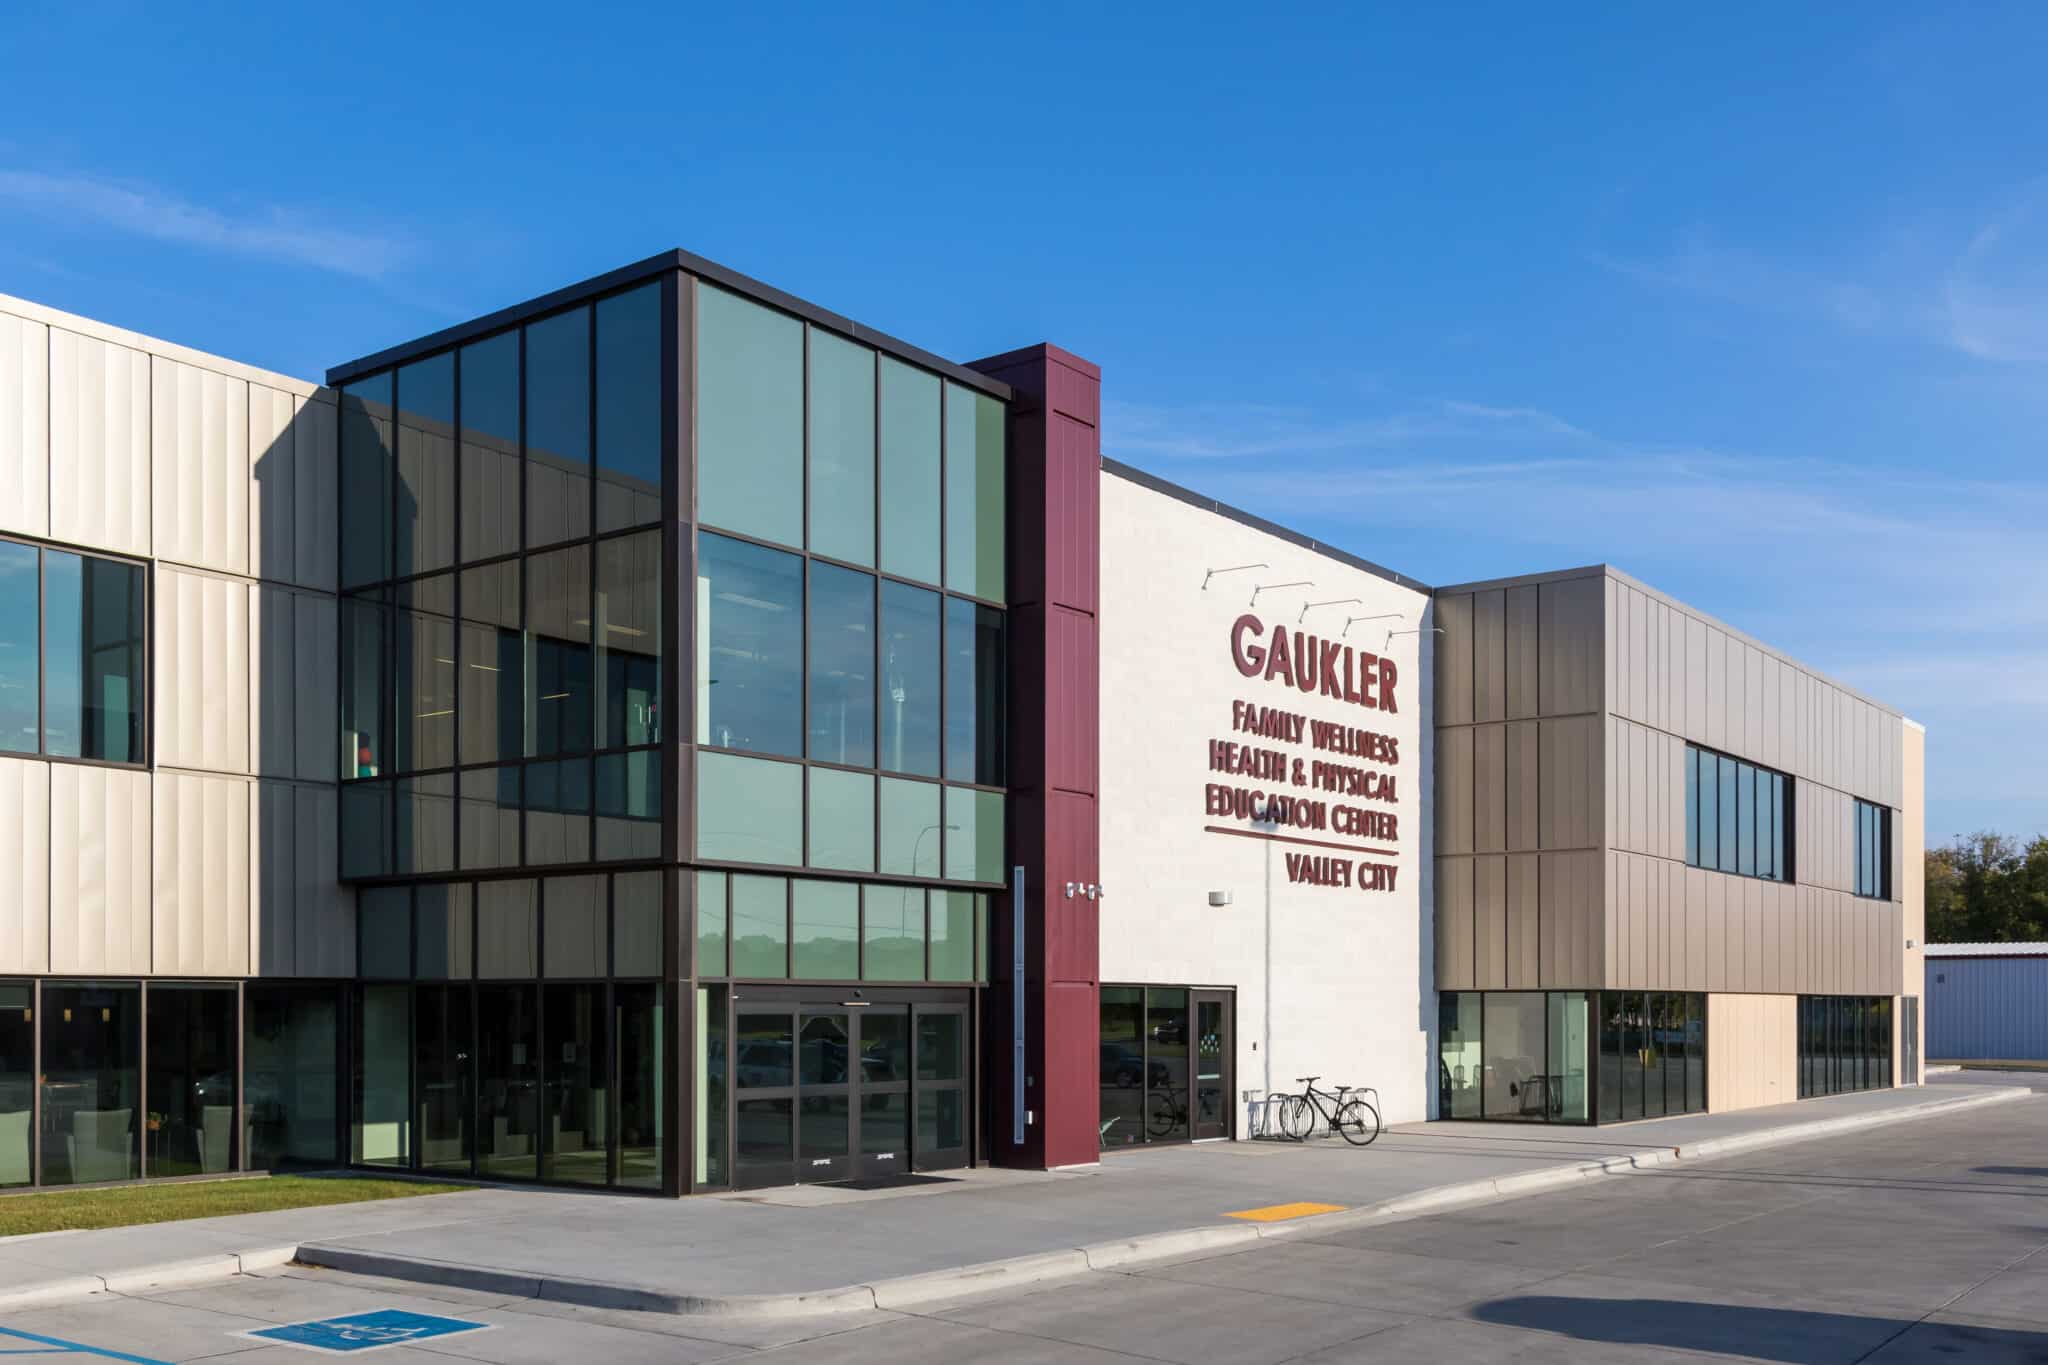 Gaukler Family Wellness Health & Physical Educational Center